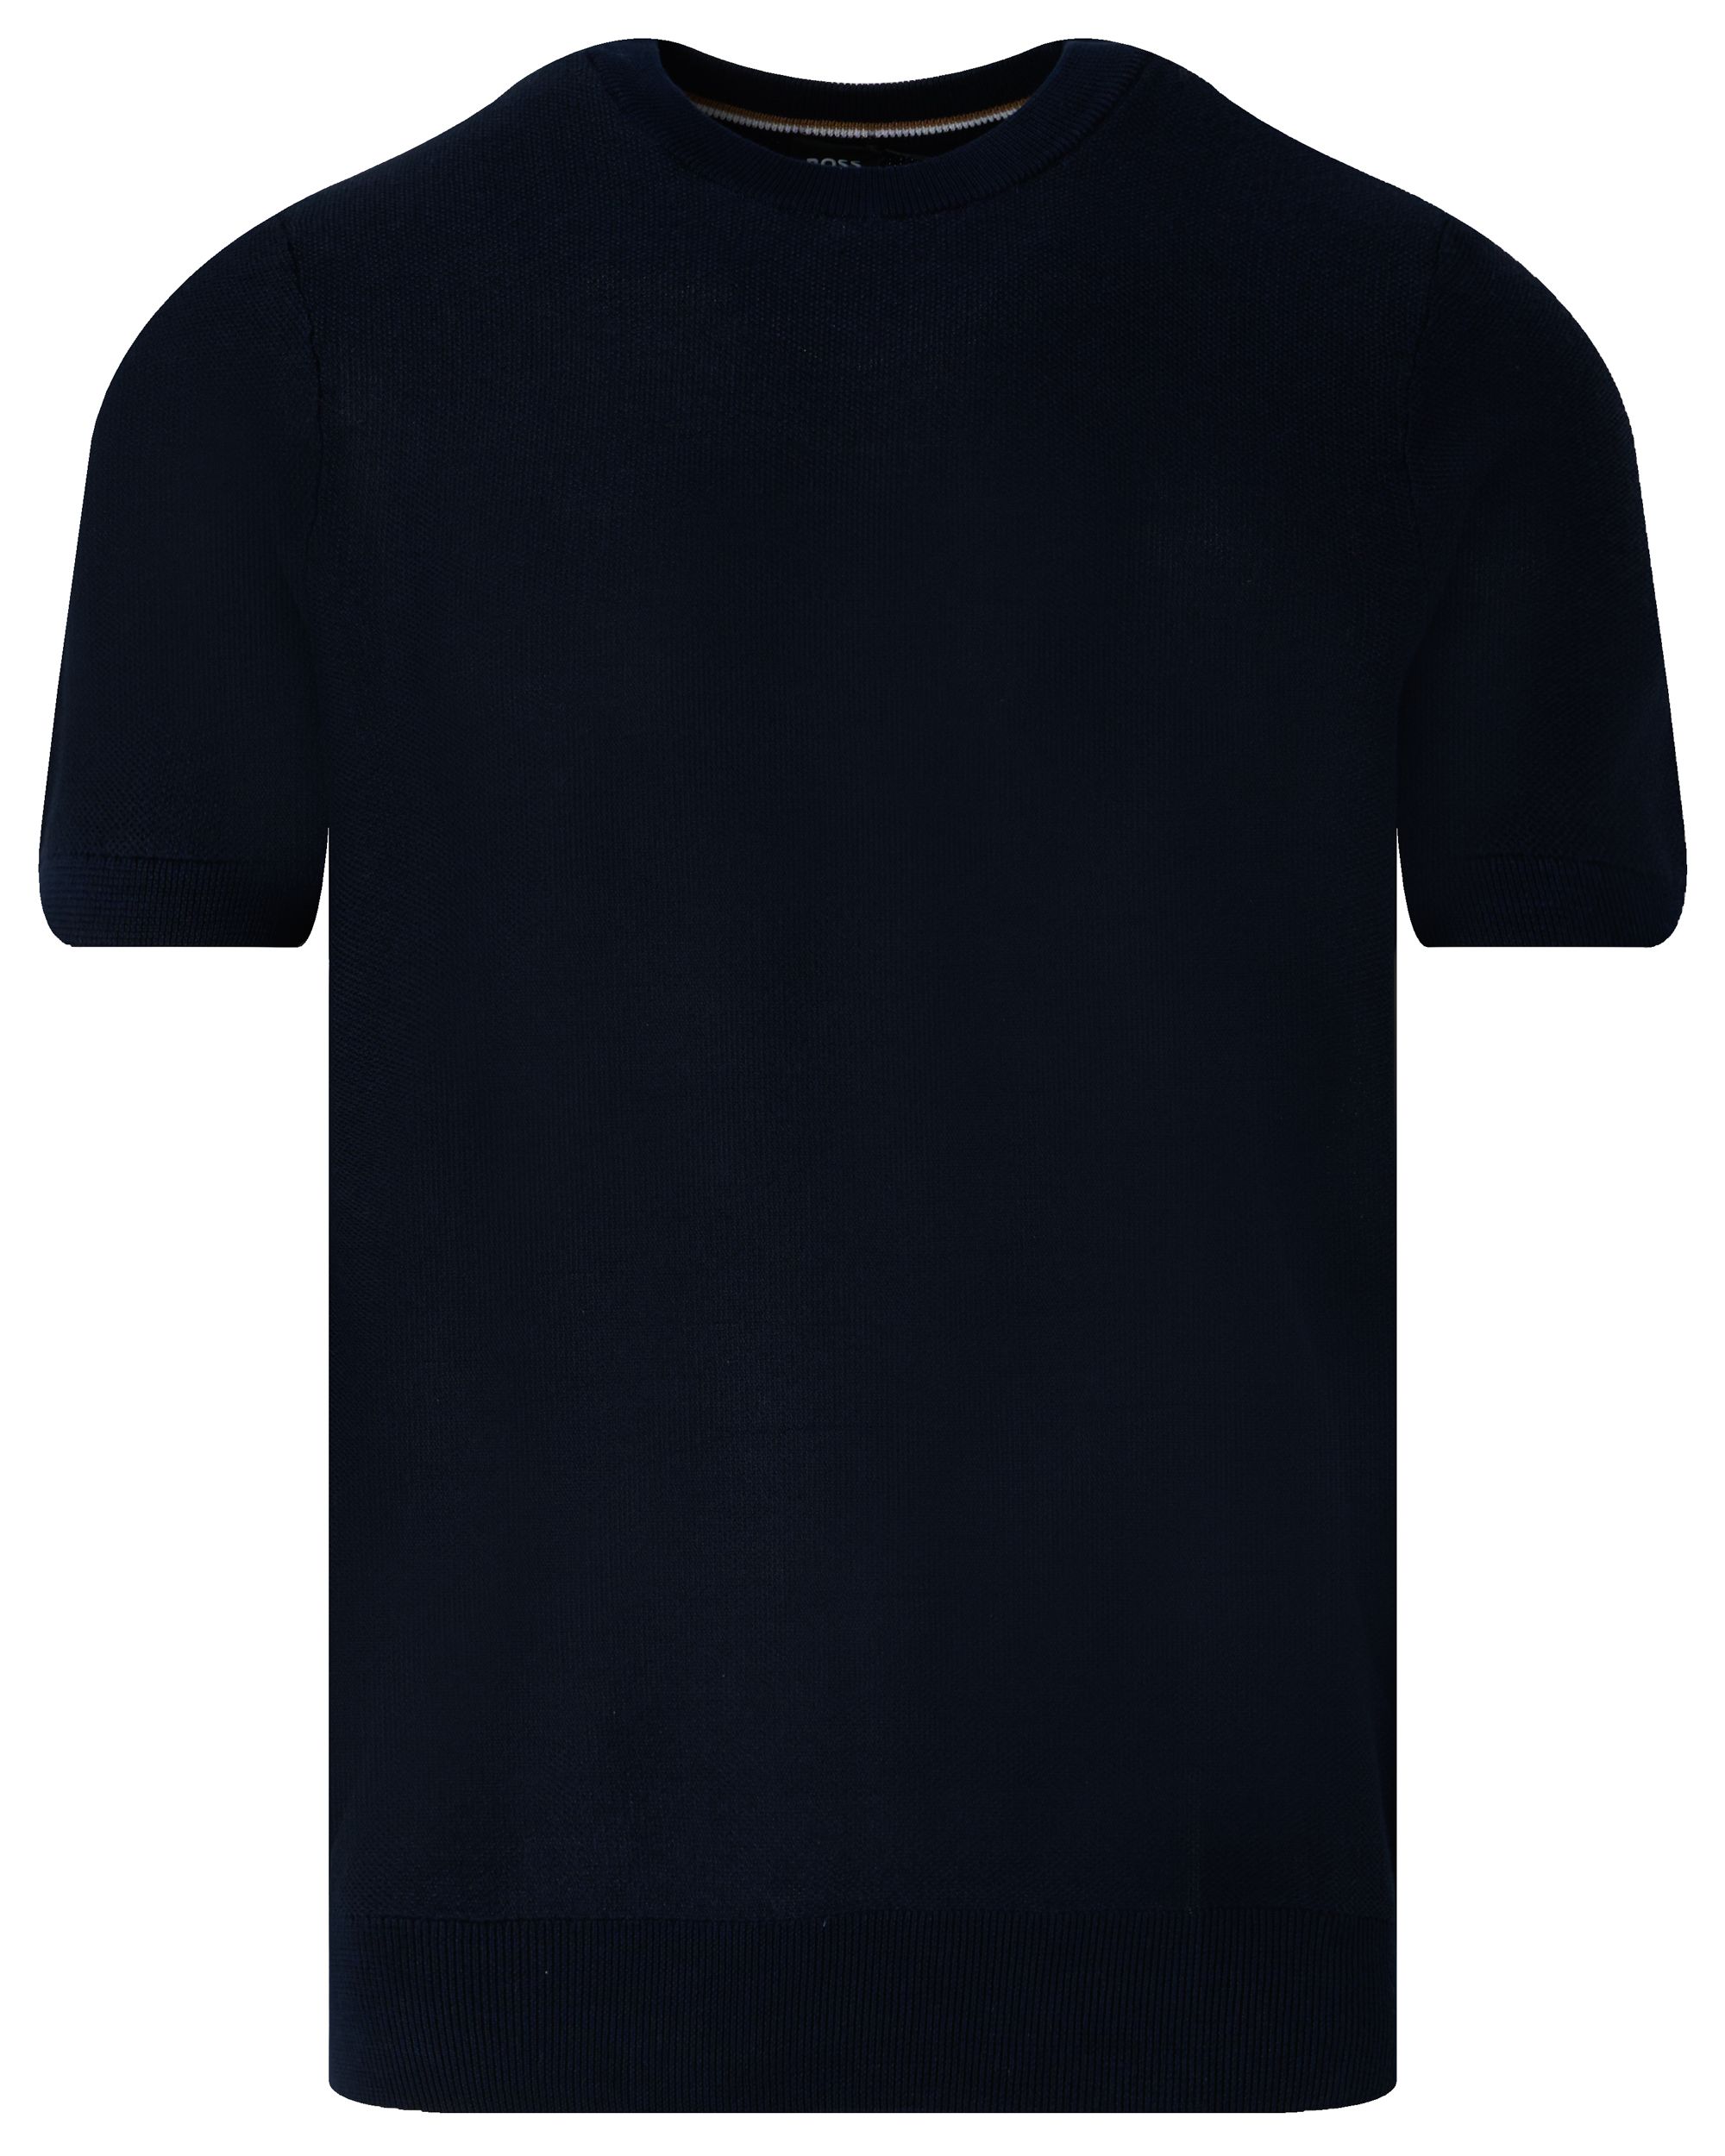 Boss Tantino T-shirt KM Donker blauw 094621-001-L